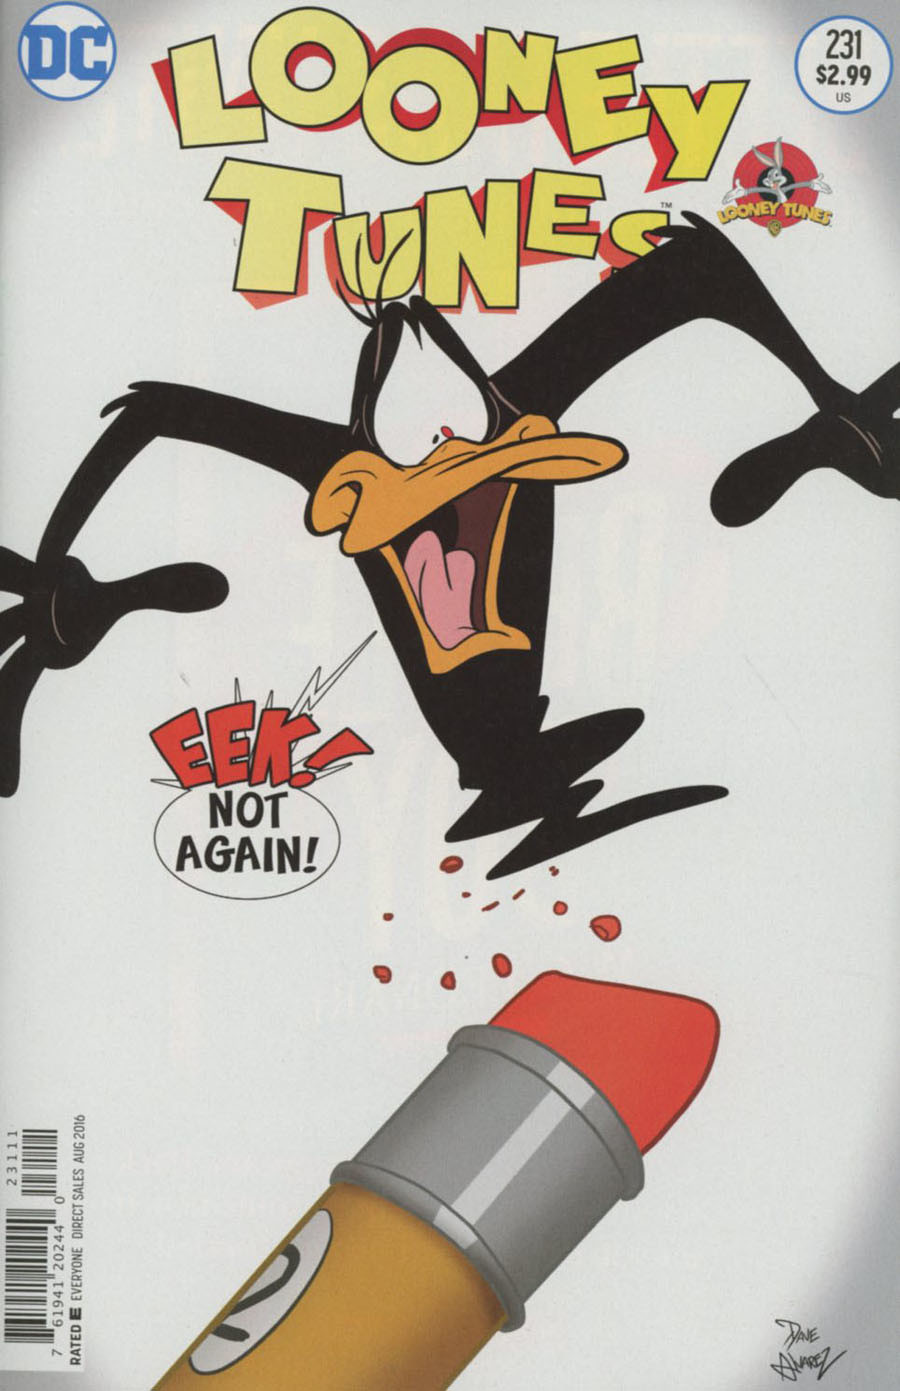 Looney Tunes Vol. 1 #231